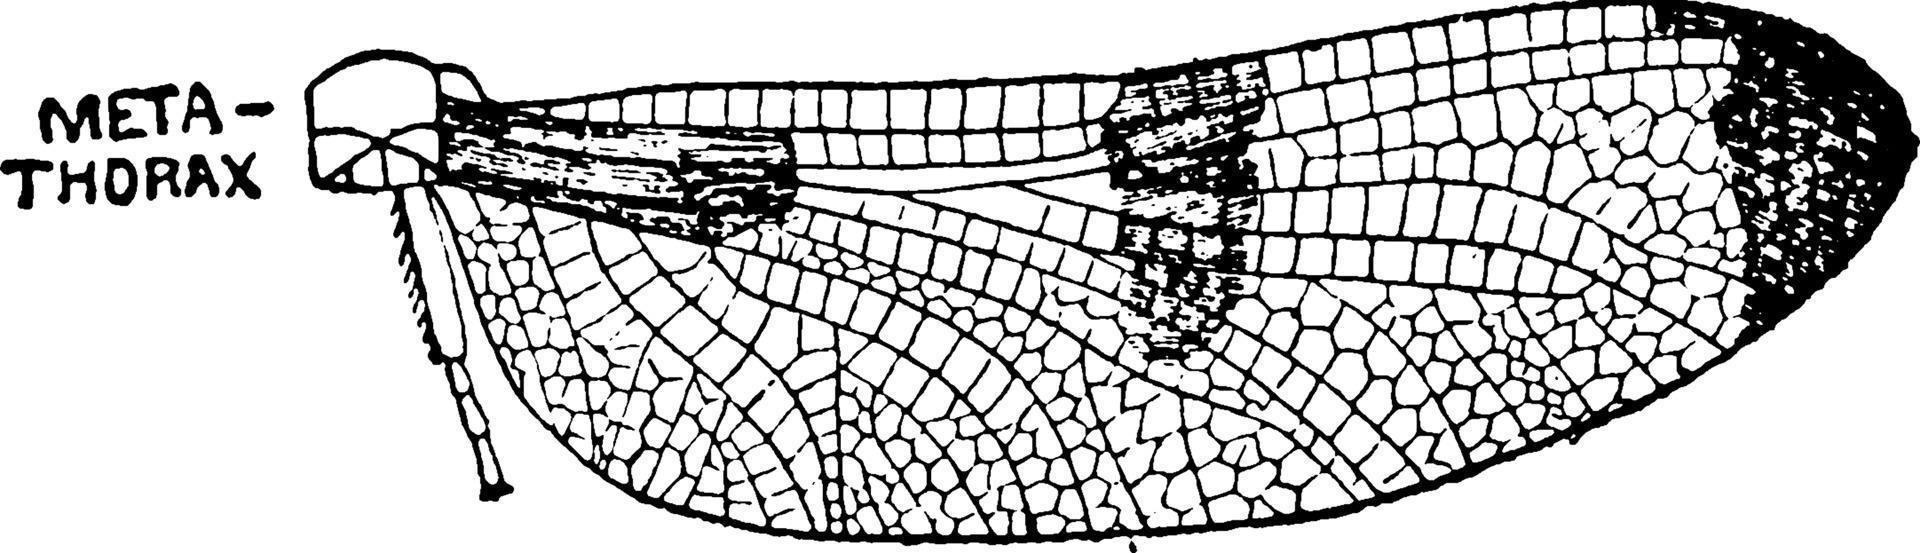 Mayfly Metathorax Section, vintage illustration. vector